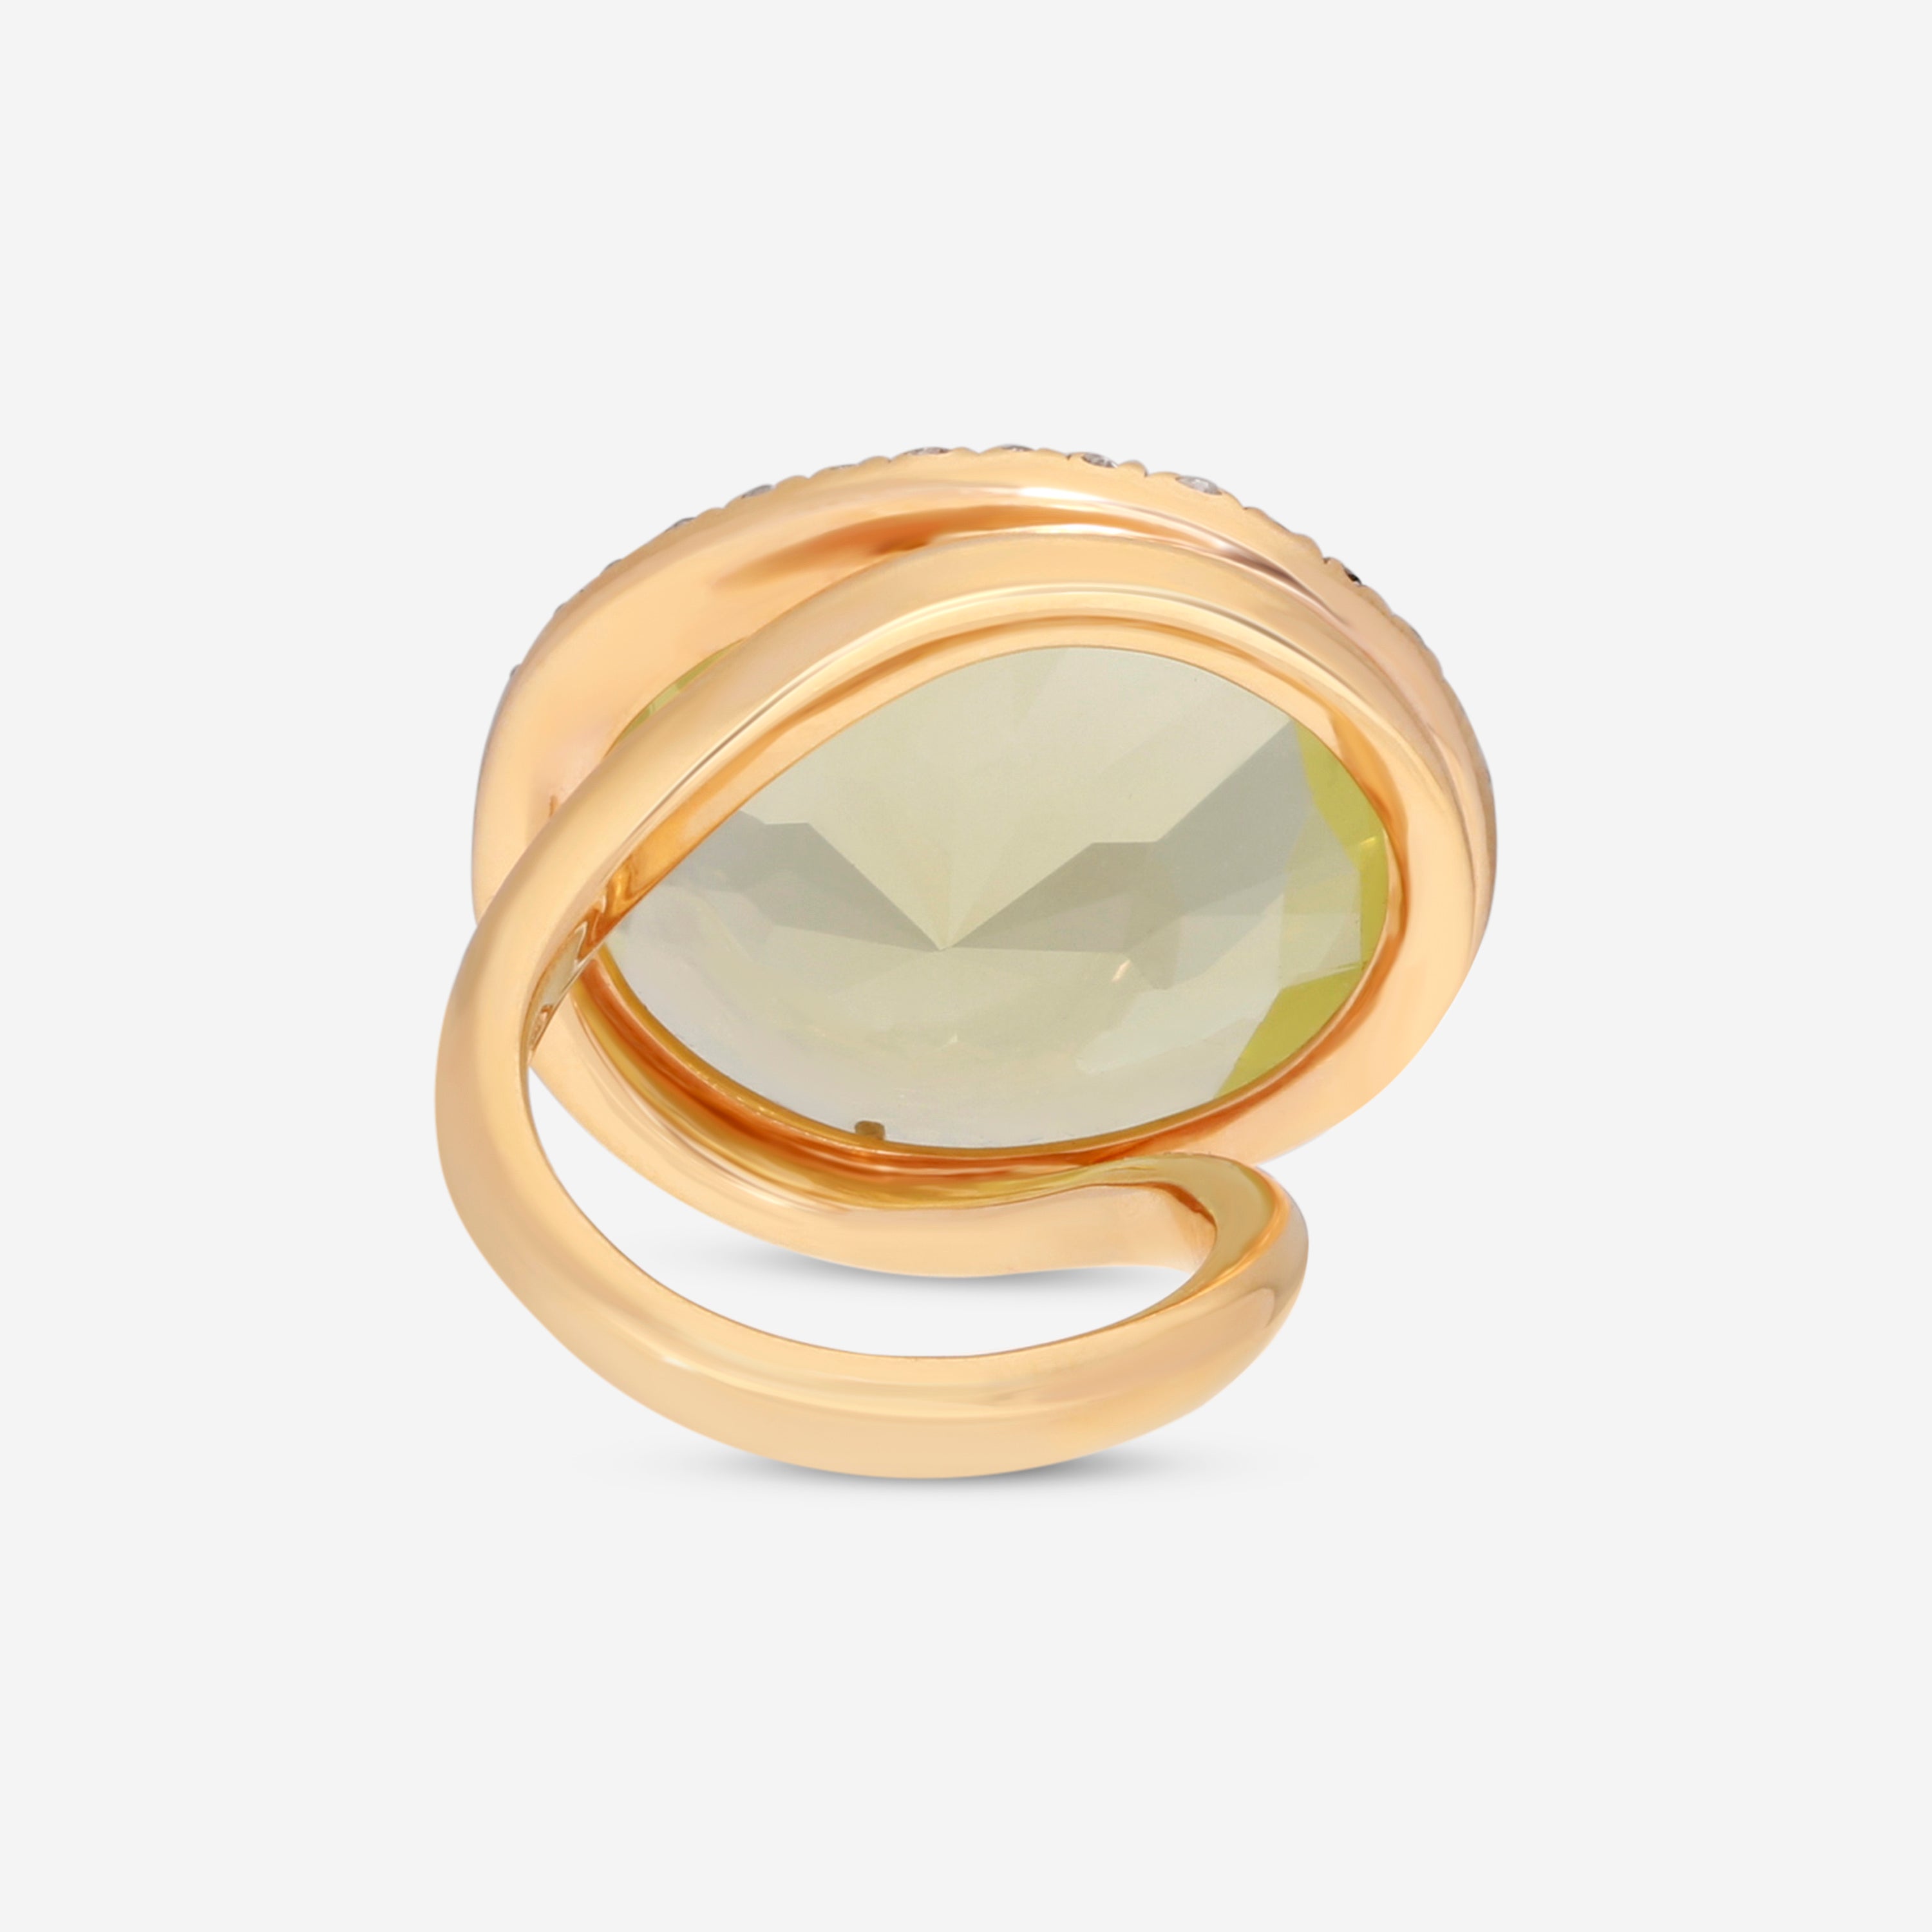 Casato 18K Yellow Gold, Quartz and Diamond Vintage Style Ring 294327